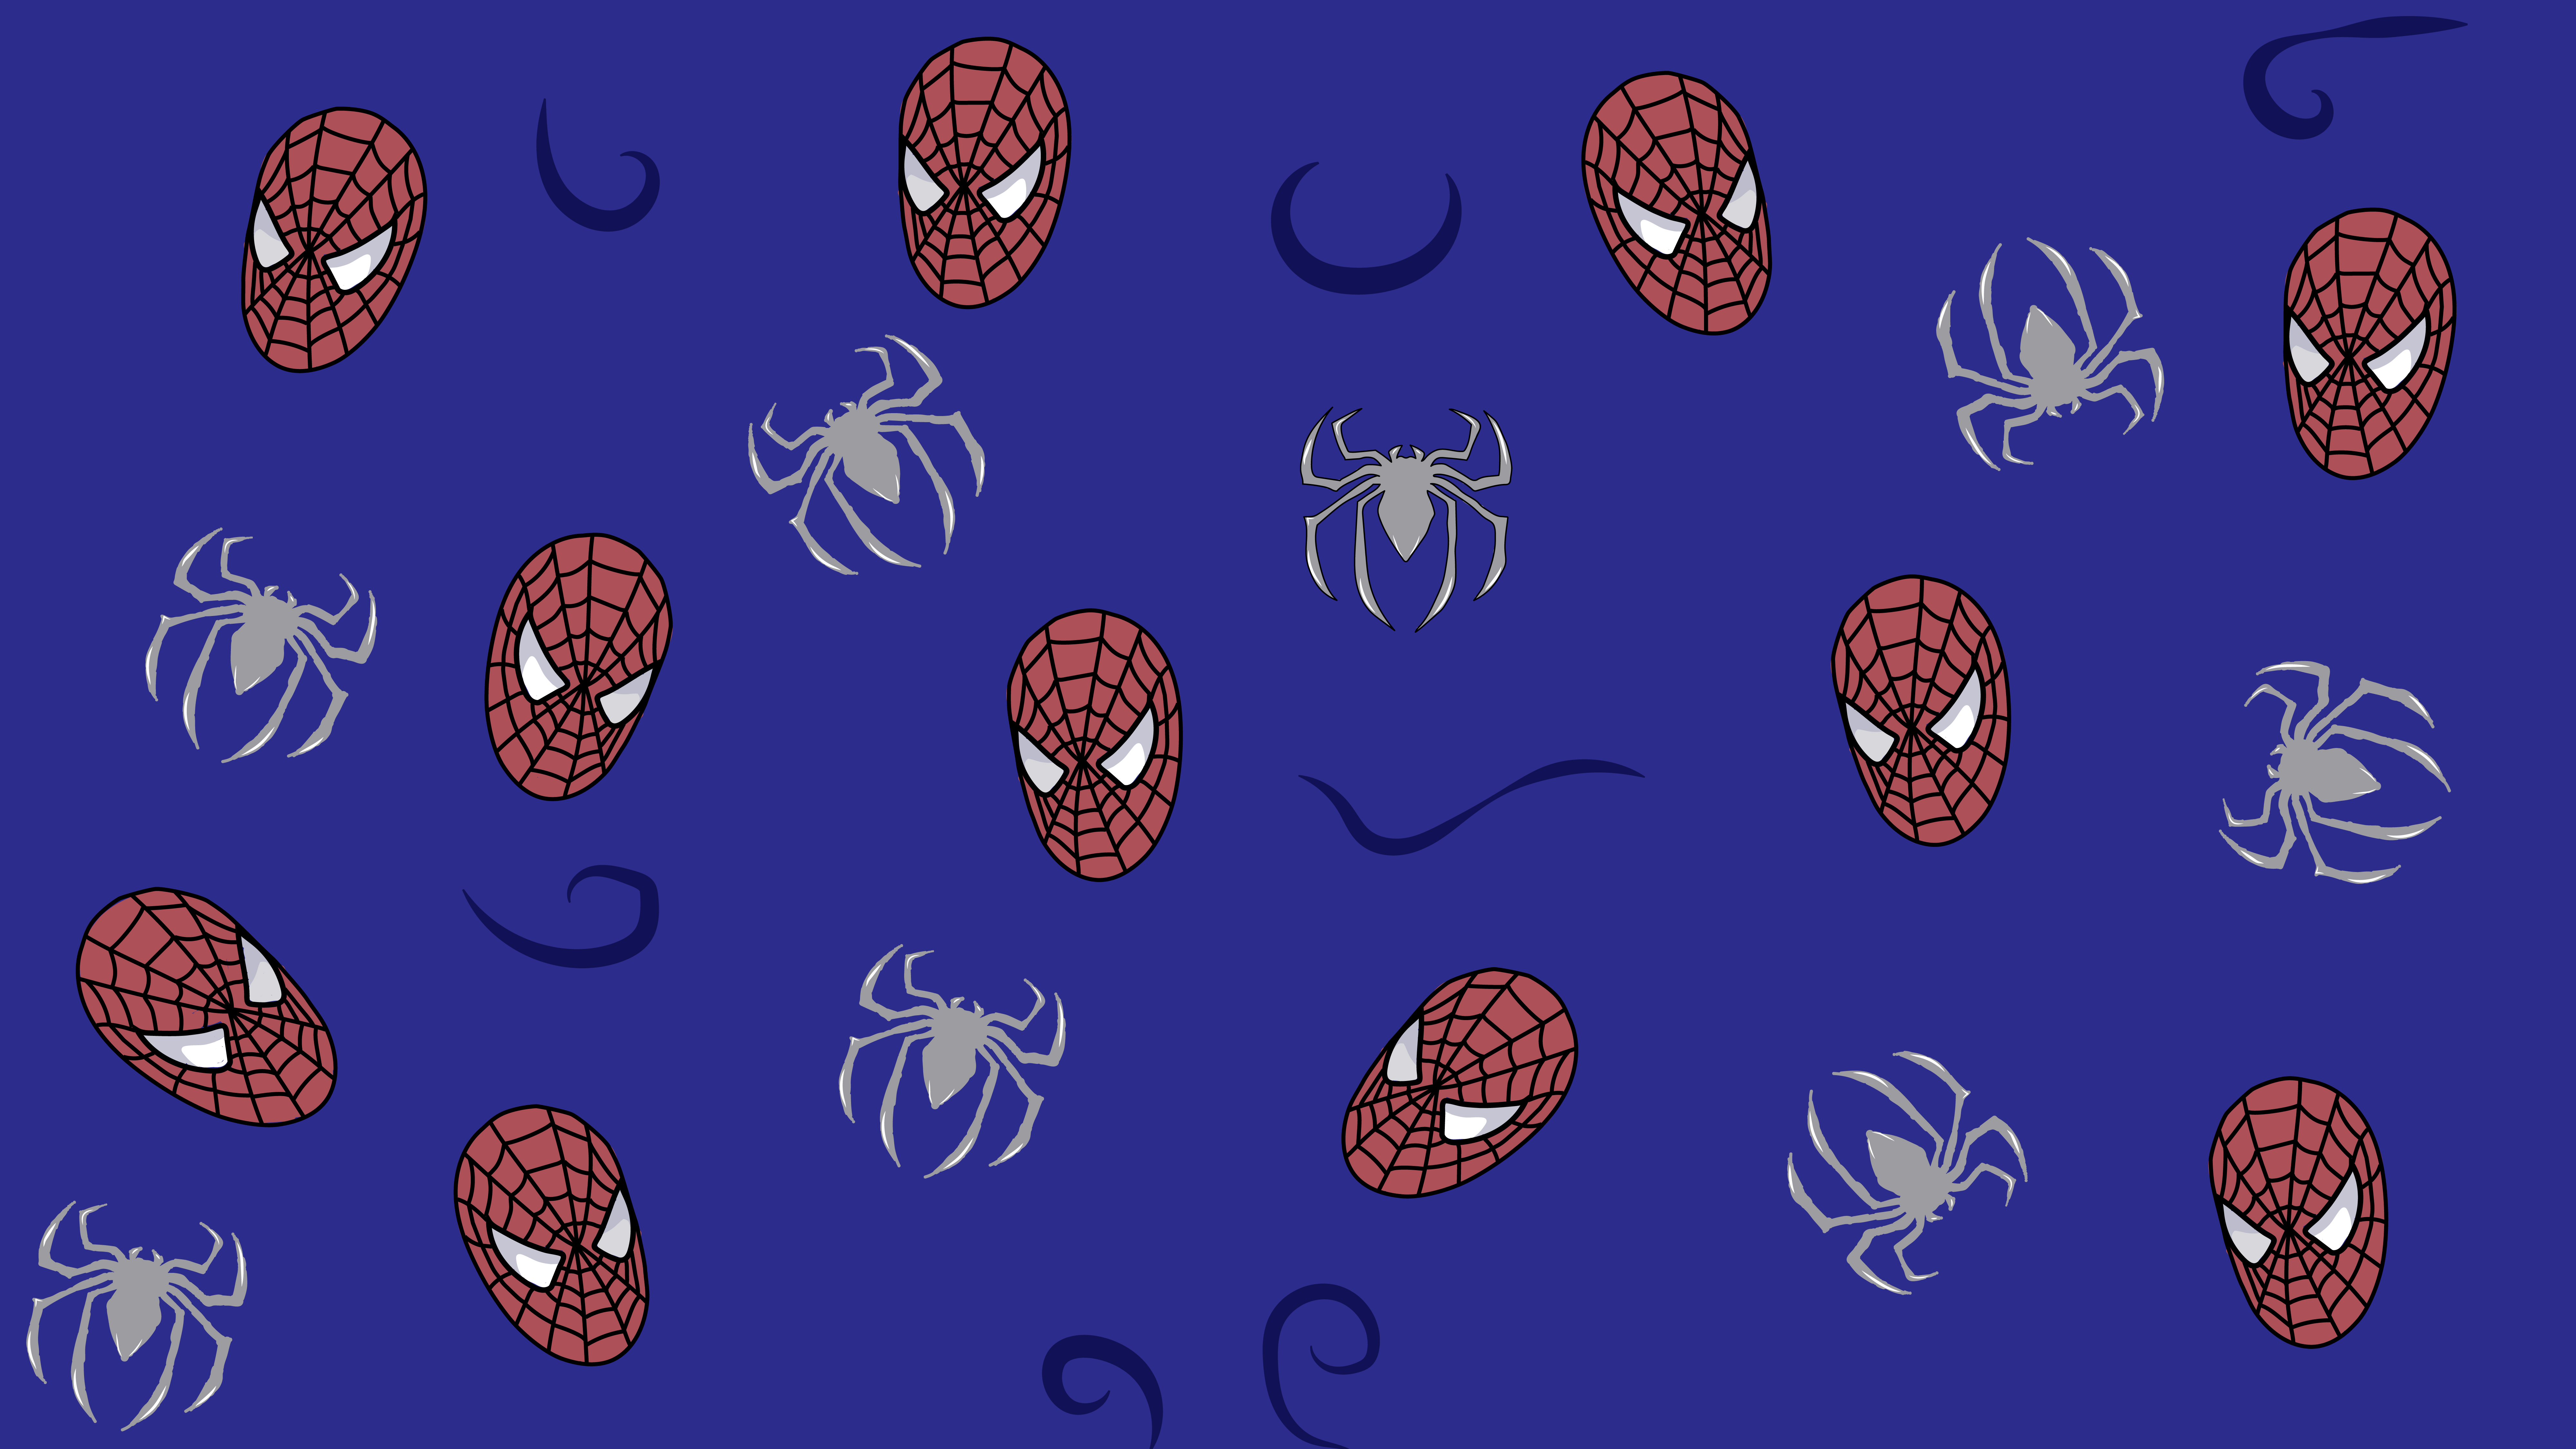 Spider-Man minimus by pedro_americo15